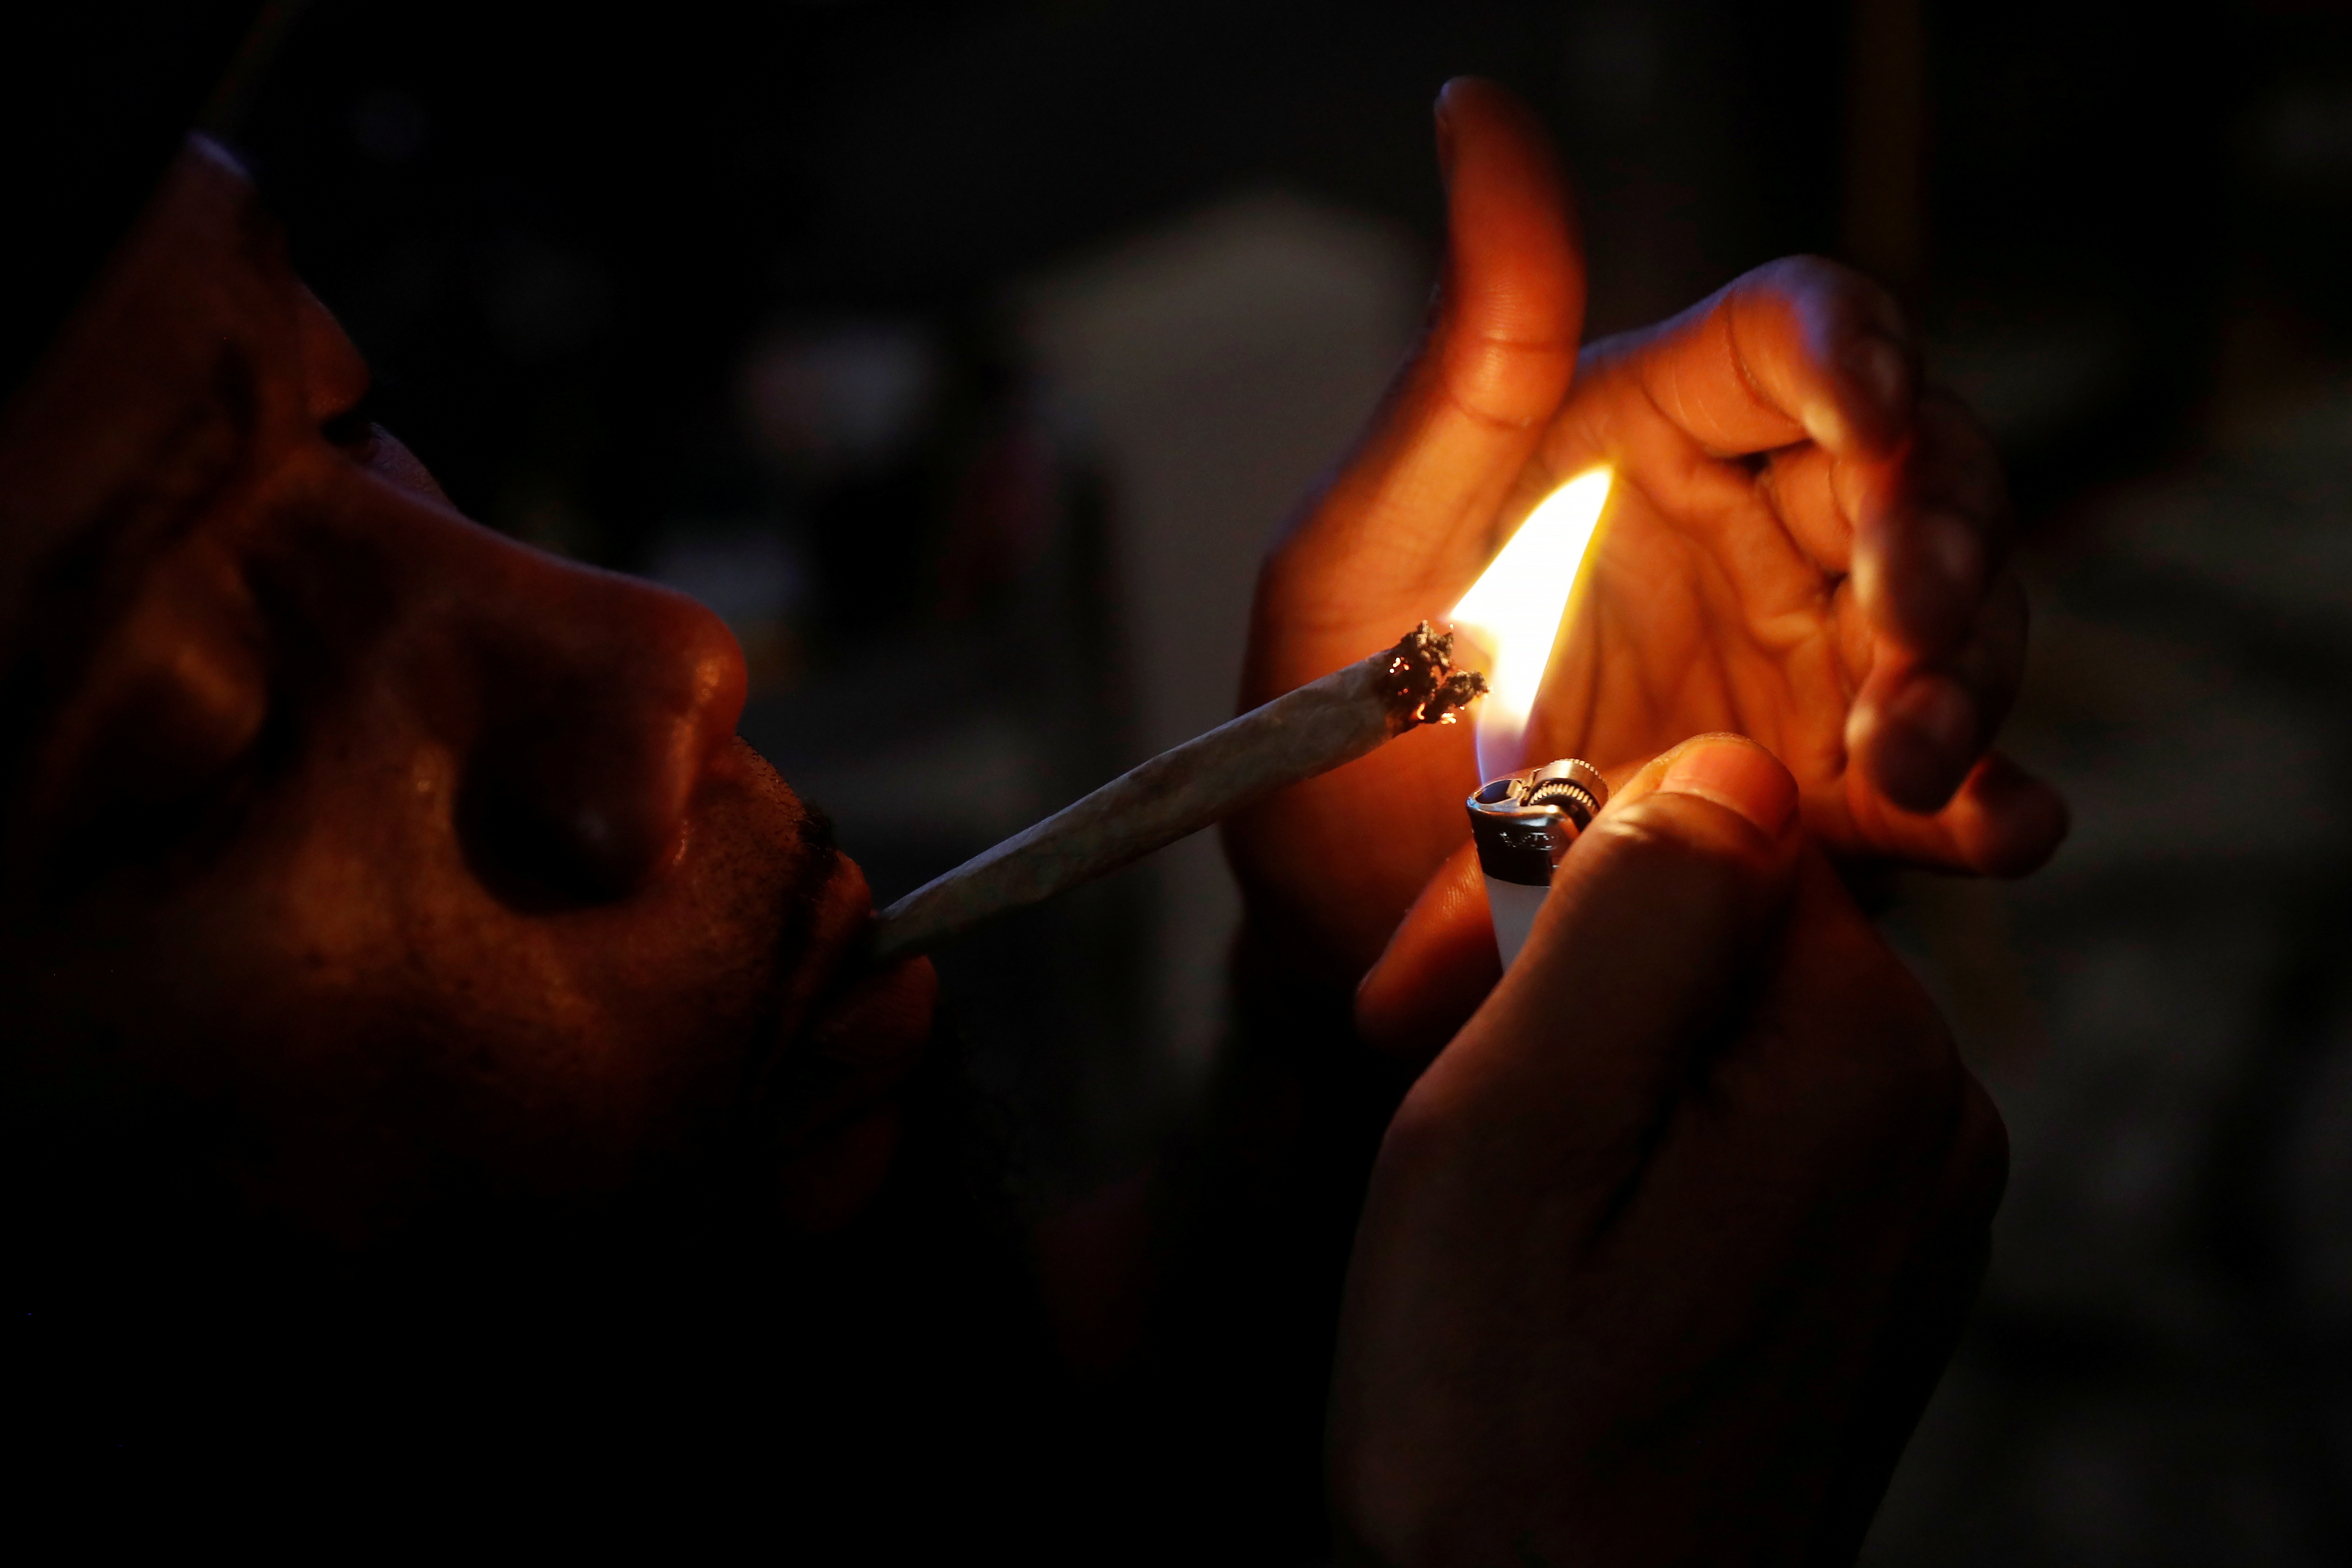 Cannabis entrepreneur Fetti smokes a hybrid strain joint of his marijuana brand 